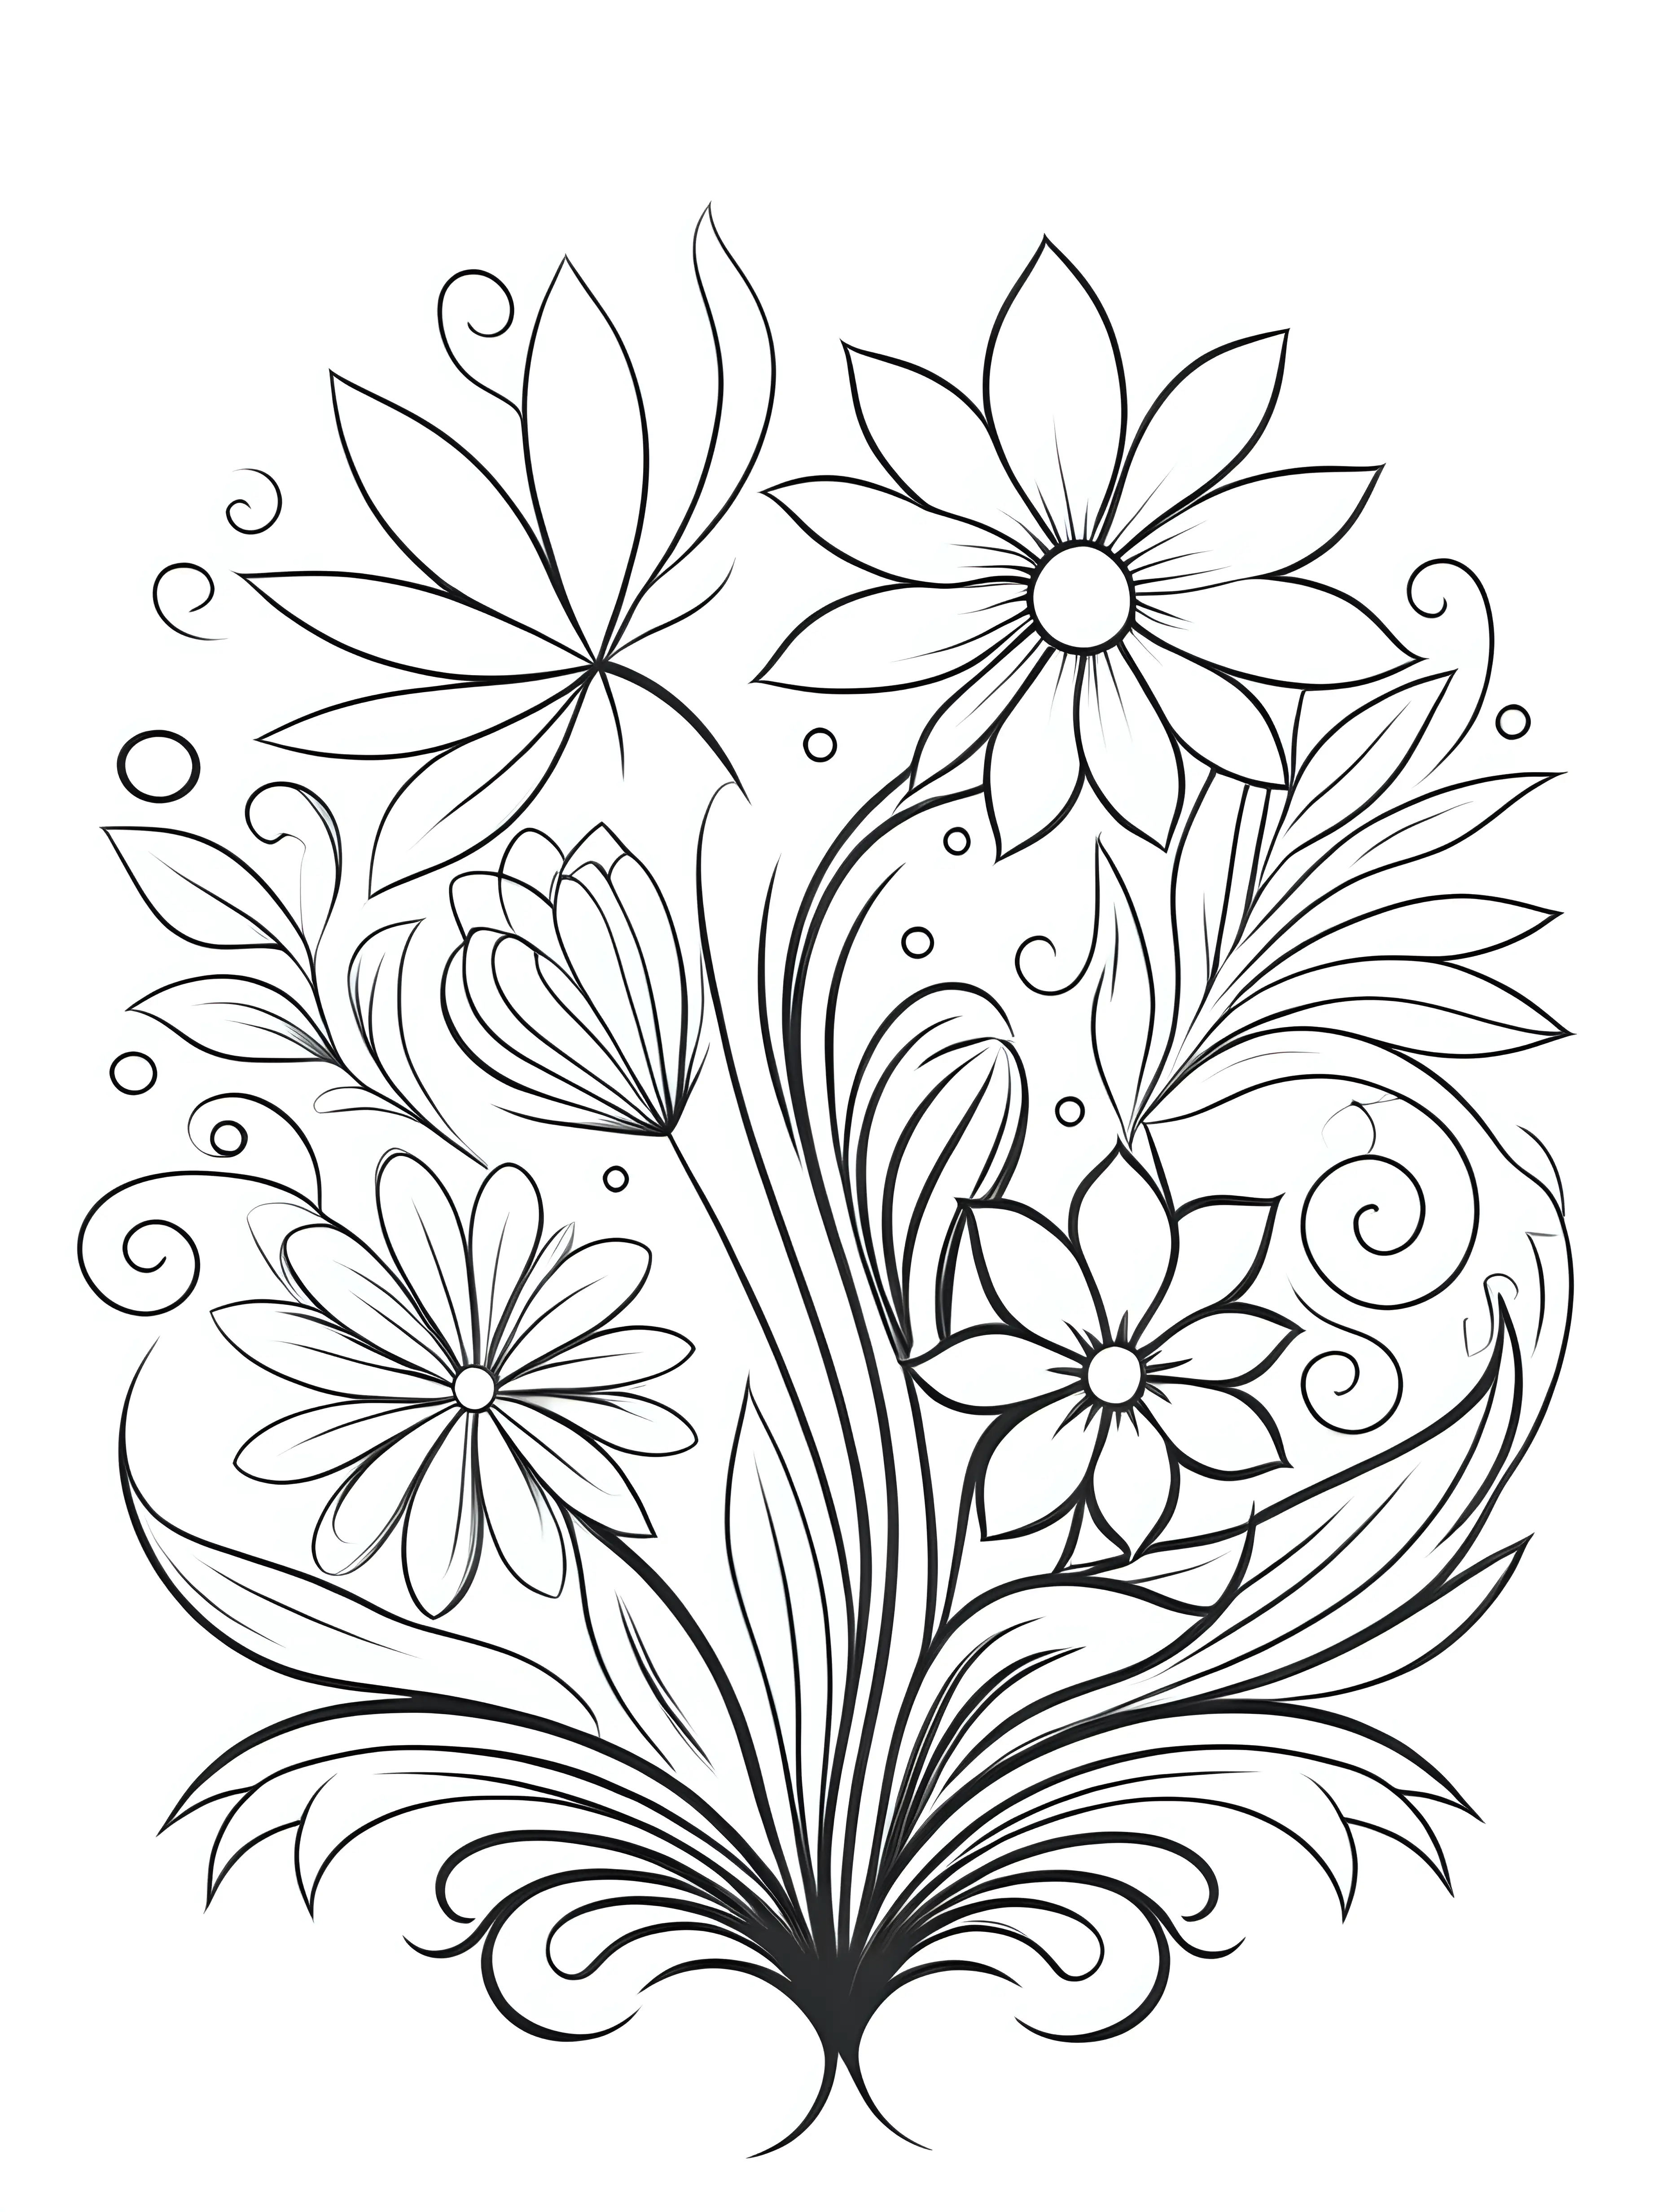 Minimalist Floral Art Coloring Page Elegant Black and White Digital Design